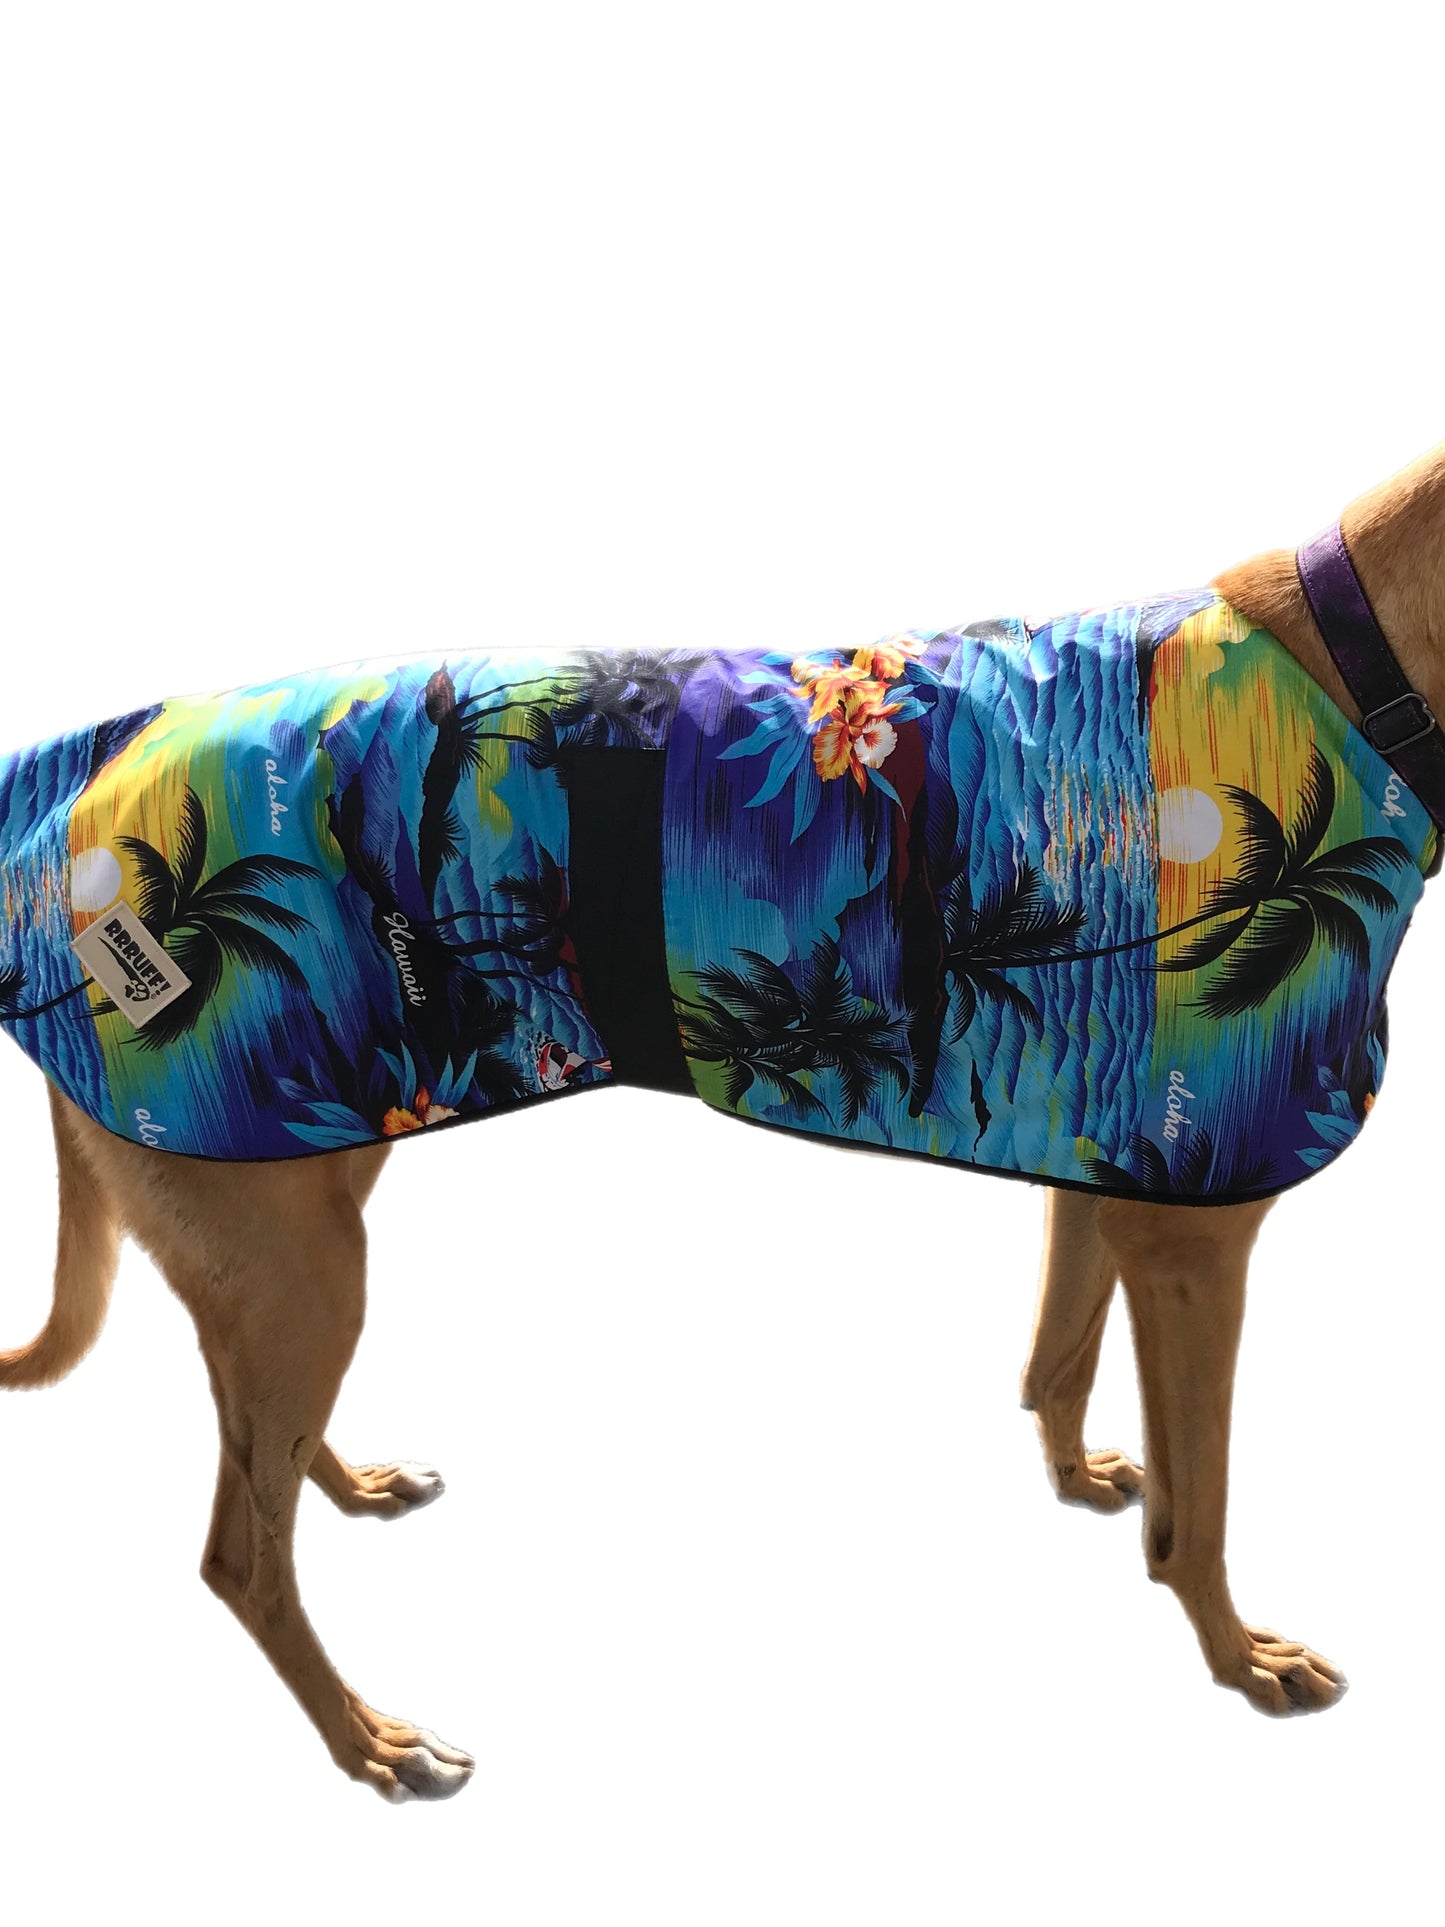 Aloha! Spring range classic style Greyhound coat in lightweight cotton & fleece washable